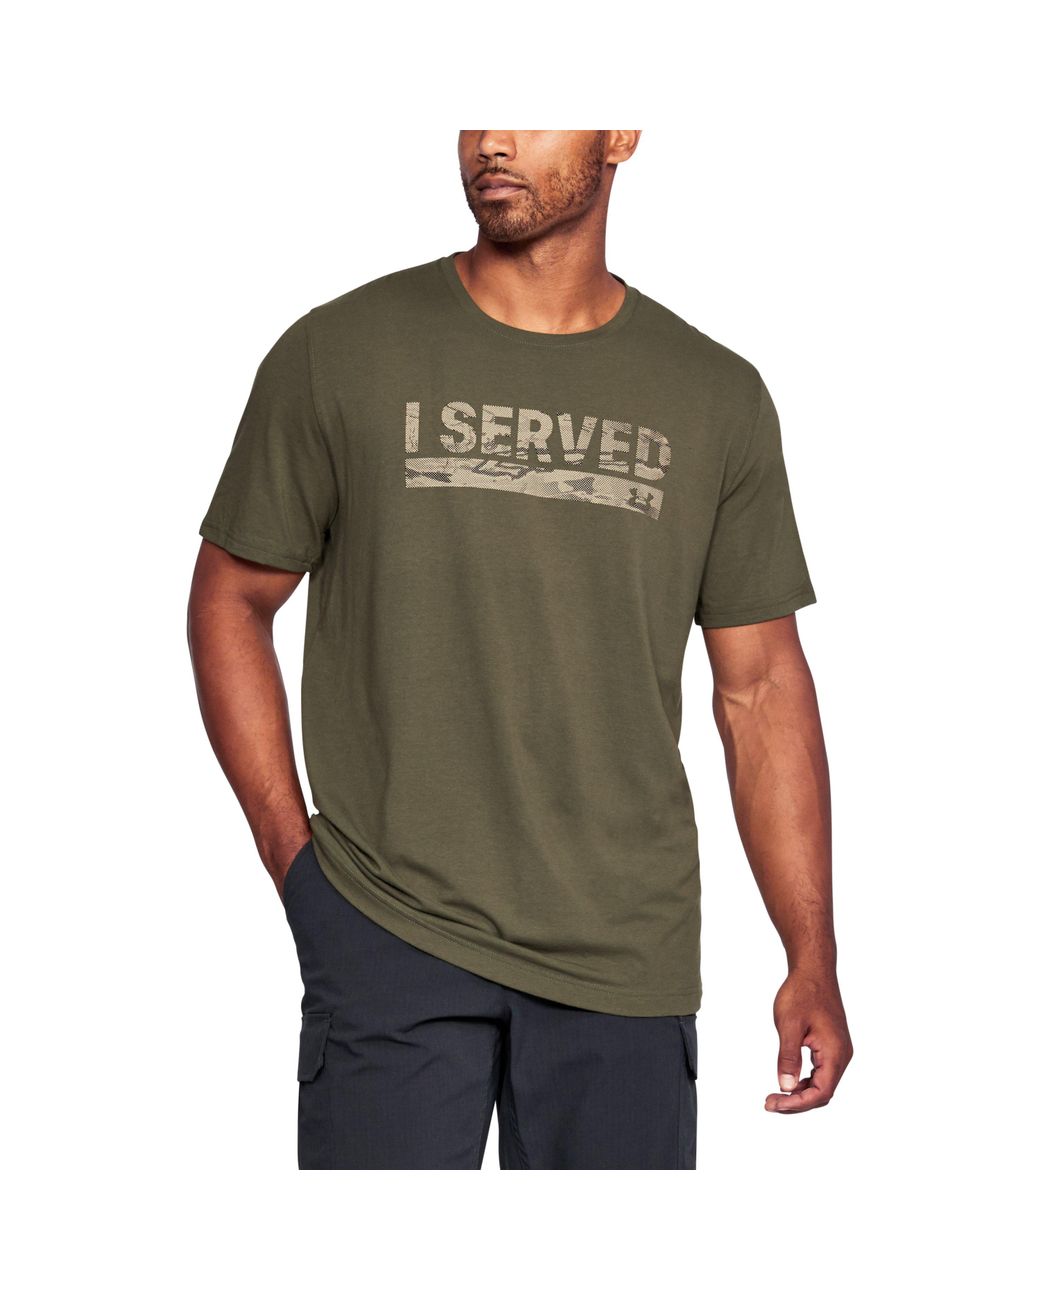 https://cdna.lystit.com/1040/1300/n/photos/underarmour/f13d0ade/under-armour-Marine-OD-Green-Mens-Ua-Freedom-I-Served-T-shirt.jpeg